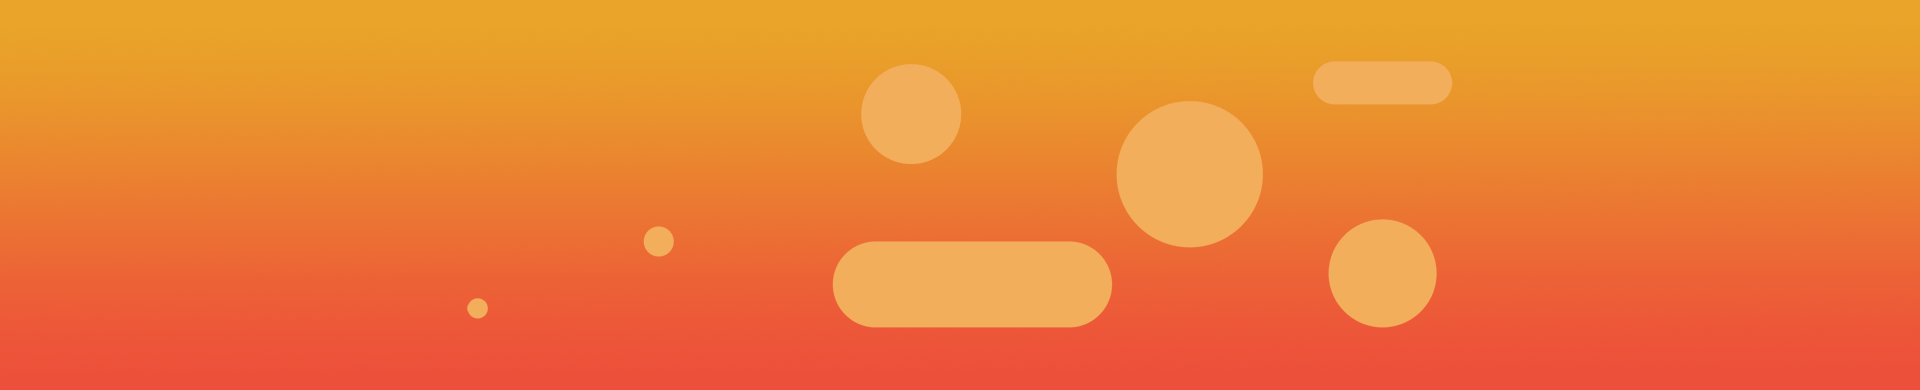 Orange blog background with circles